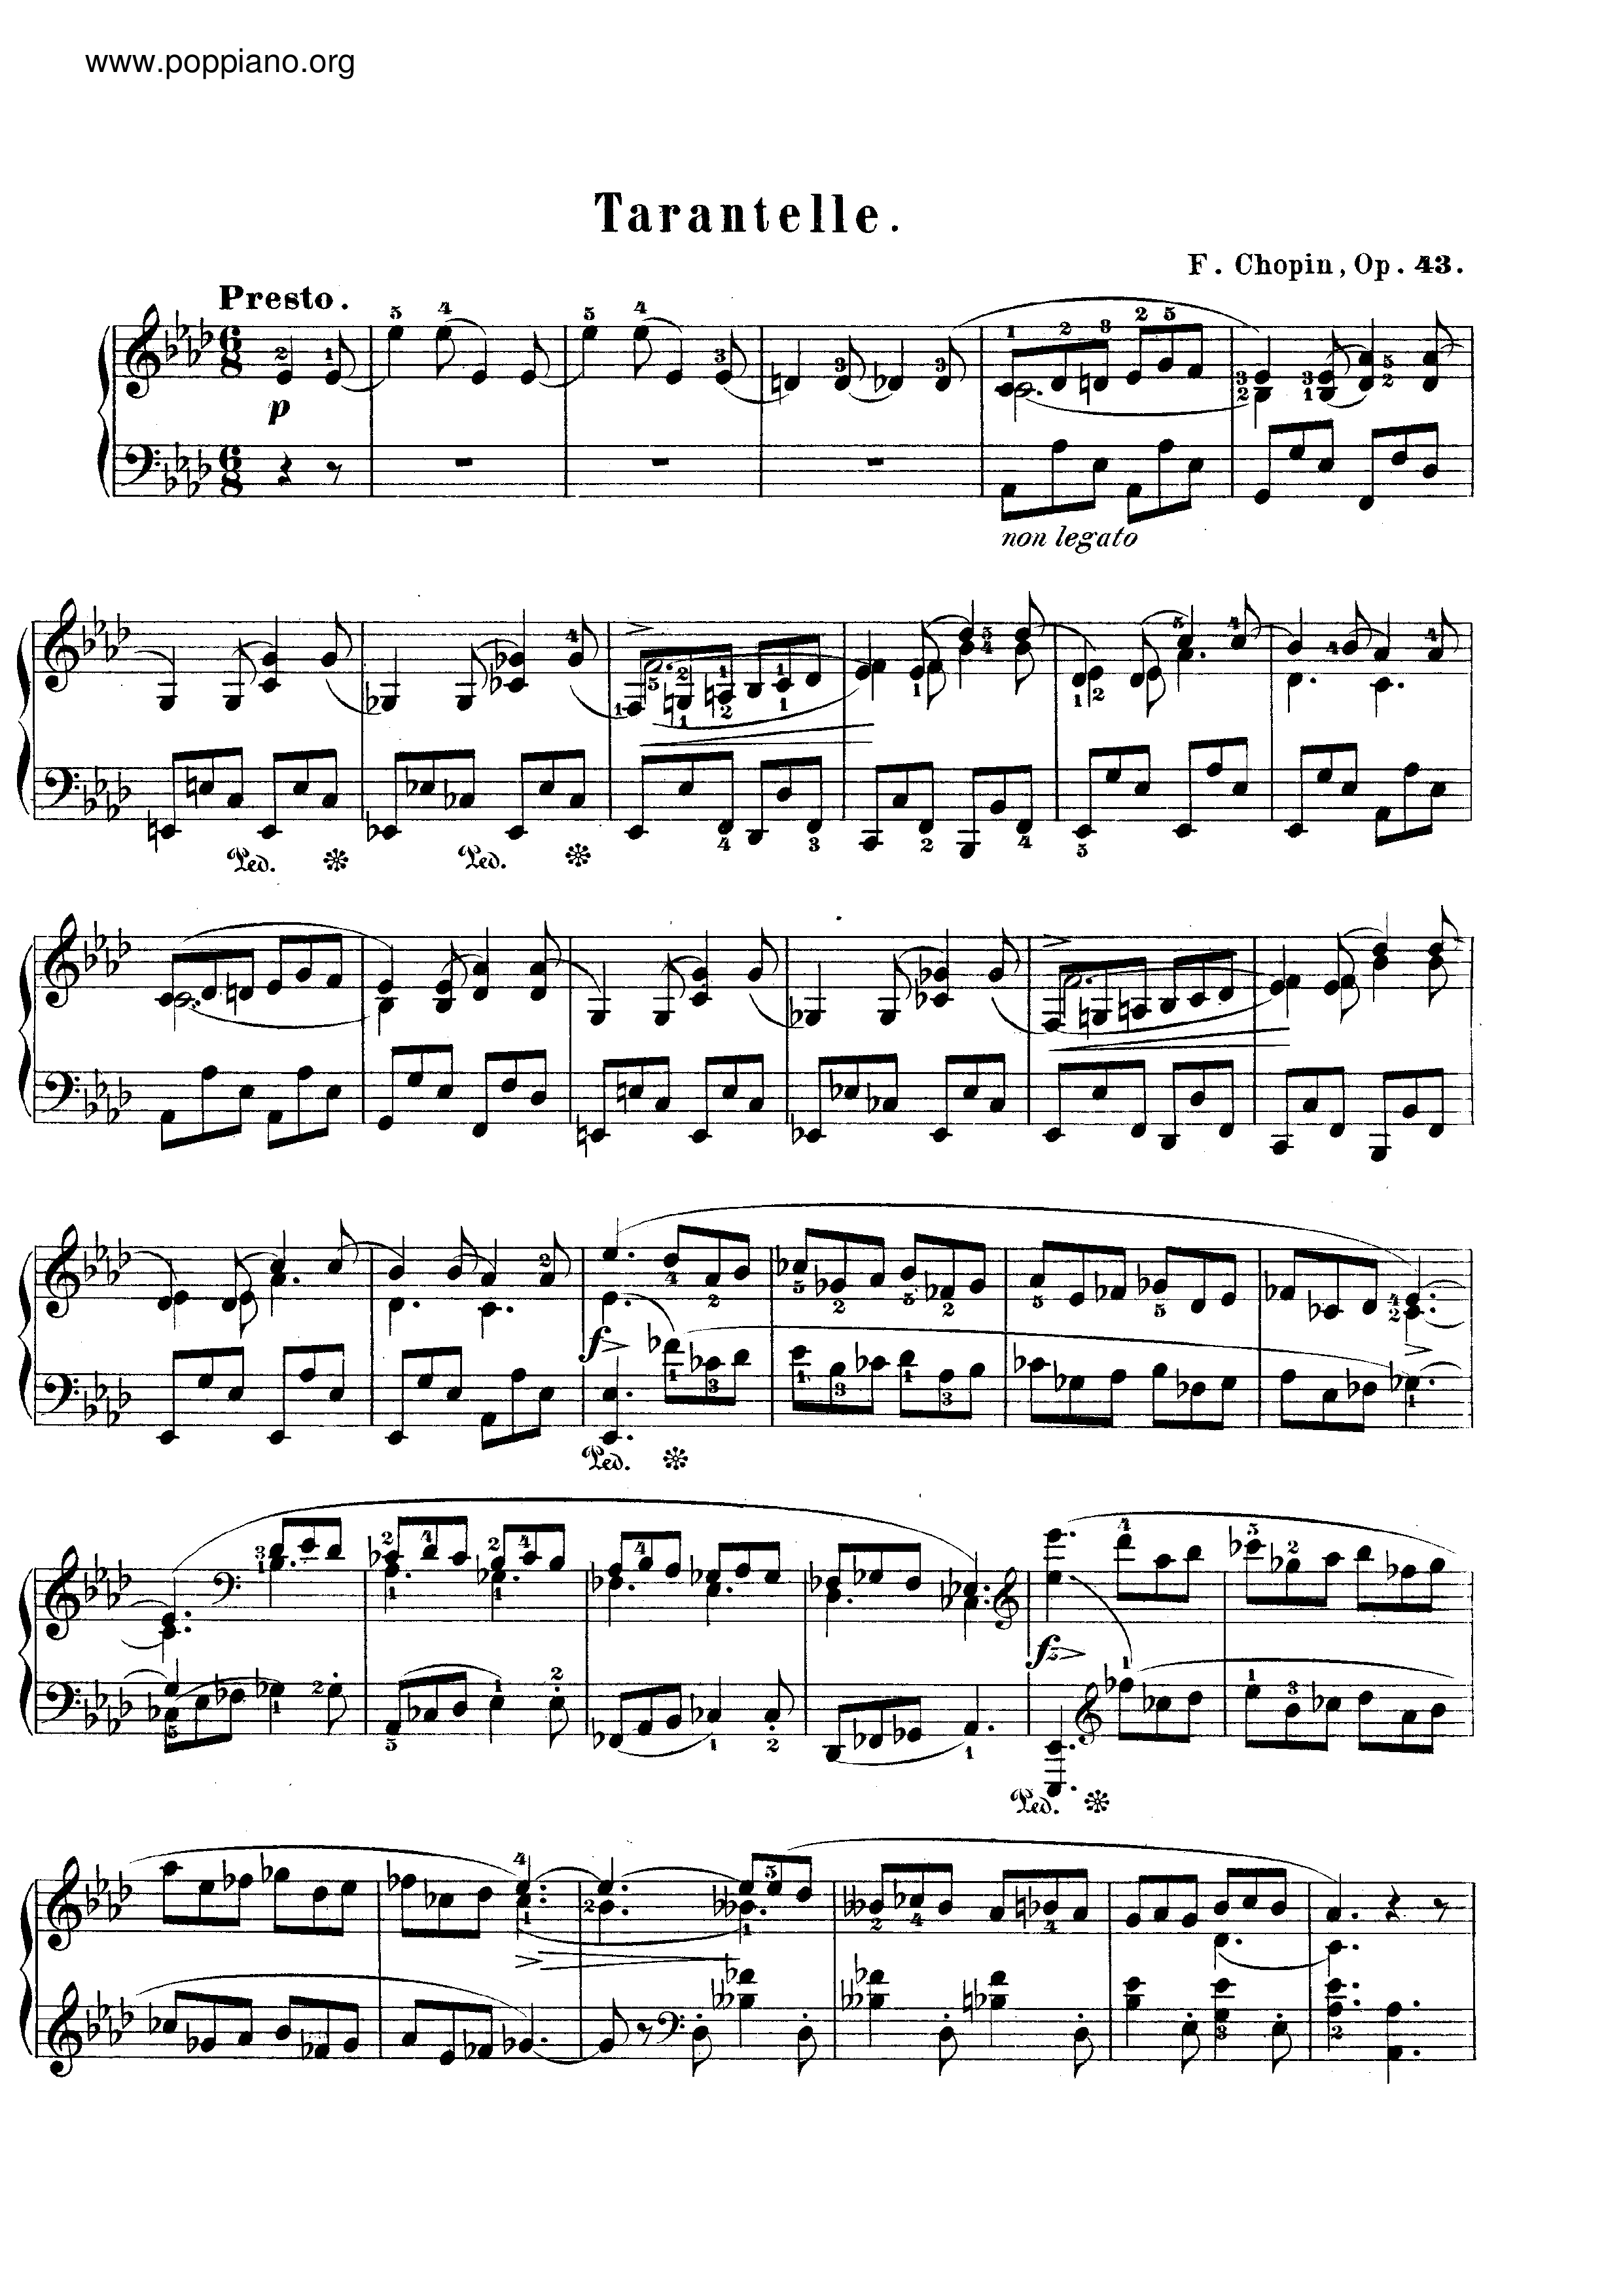 Tarantella Op. 43 Score